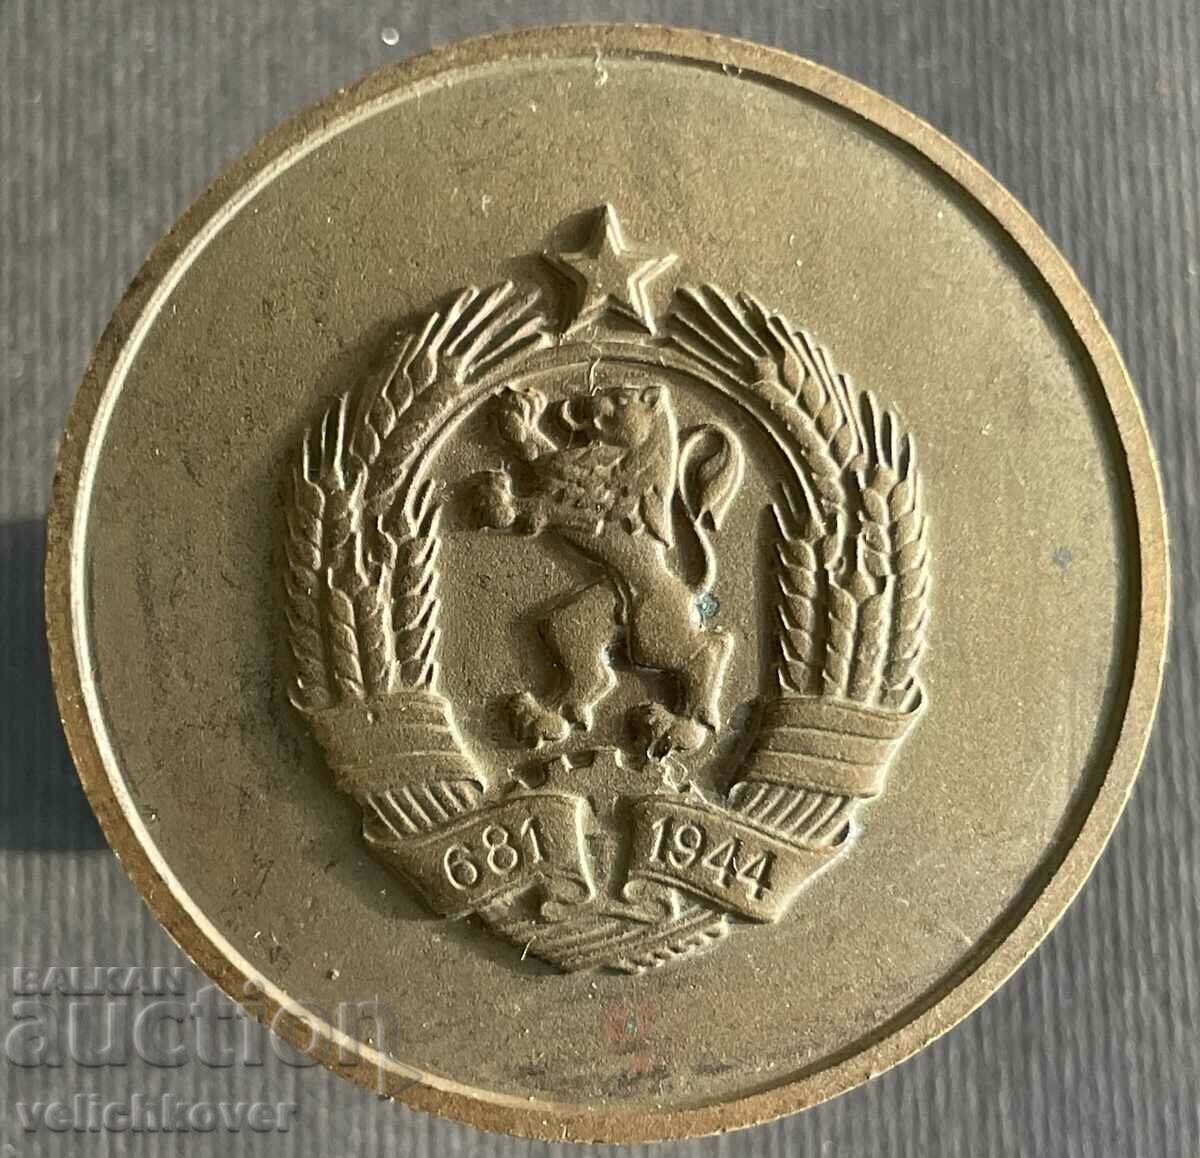 35235 България герб НРБ Народна Република България бронзов